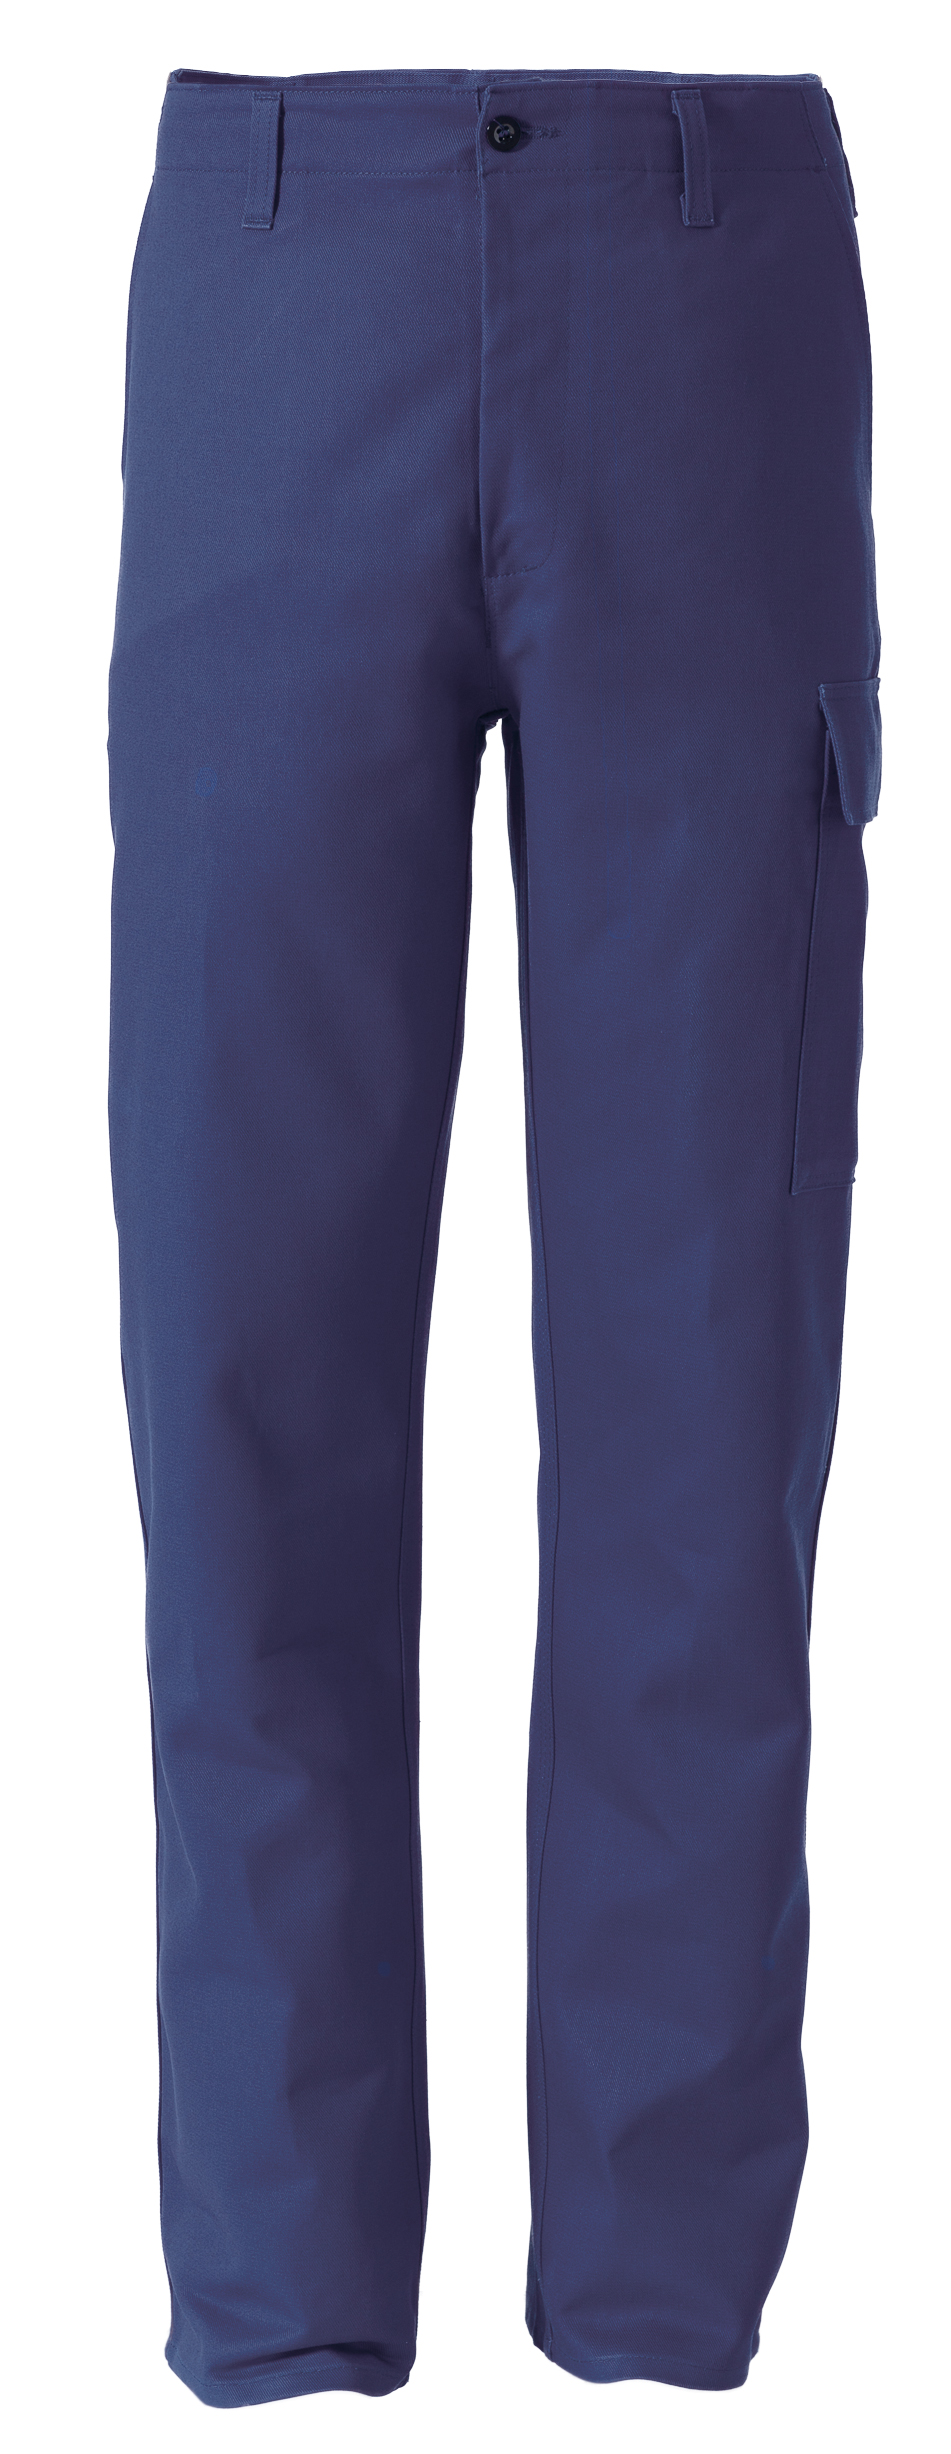 ROFA Bundhose Arbeitshose Berufshose Workerhose Arbeitskleidung Berufskleidung marine ca 330 g